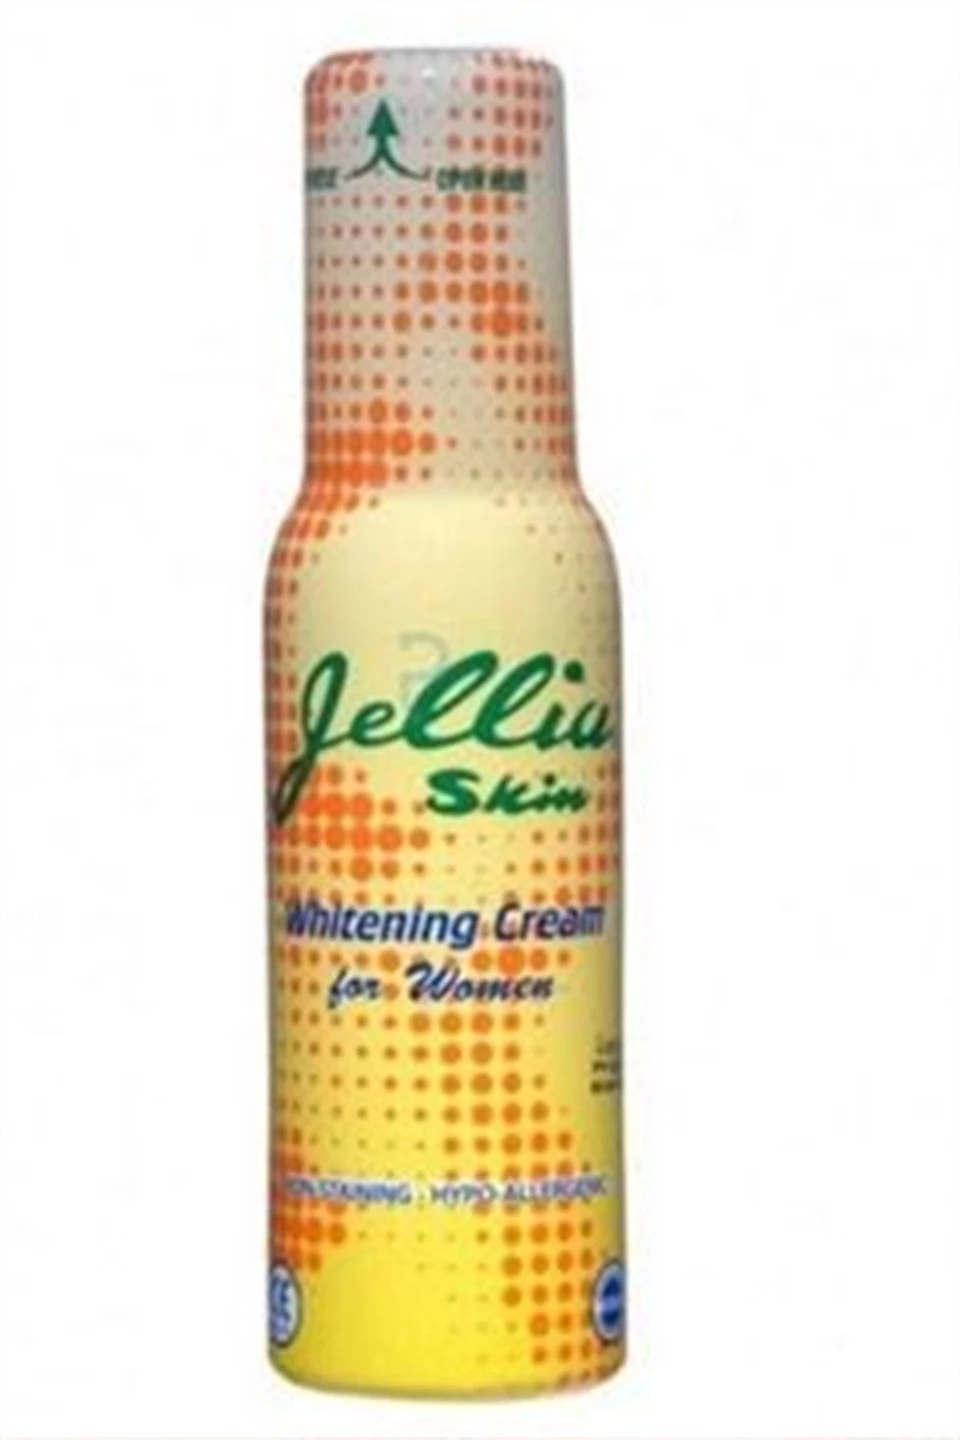 Jellia Skin Whitening Cream For Women 100ml.